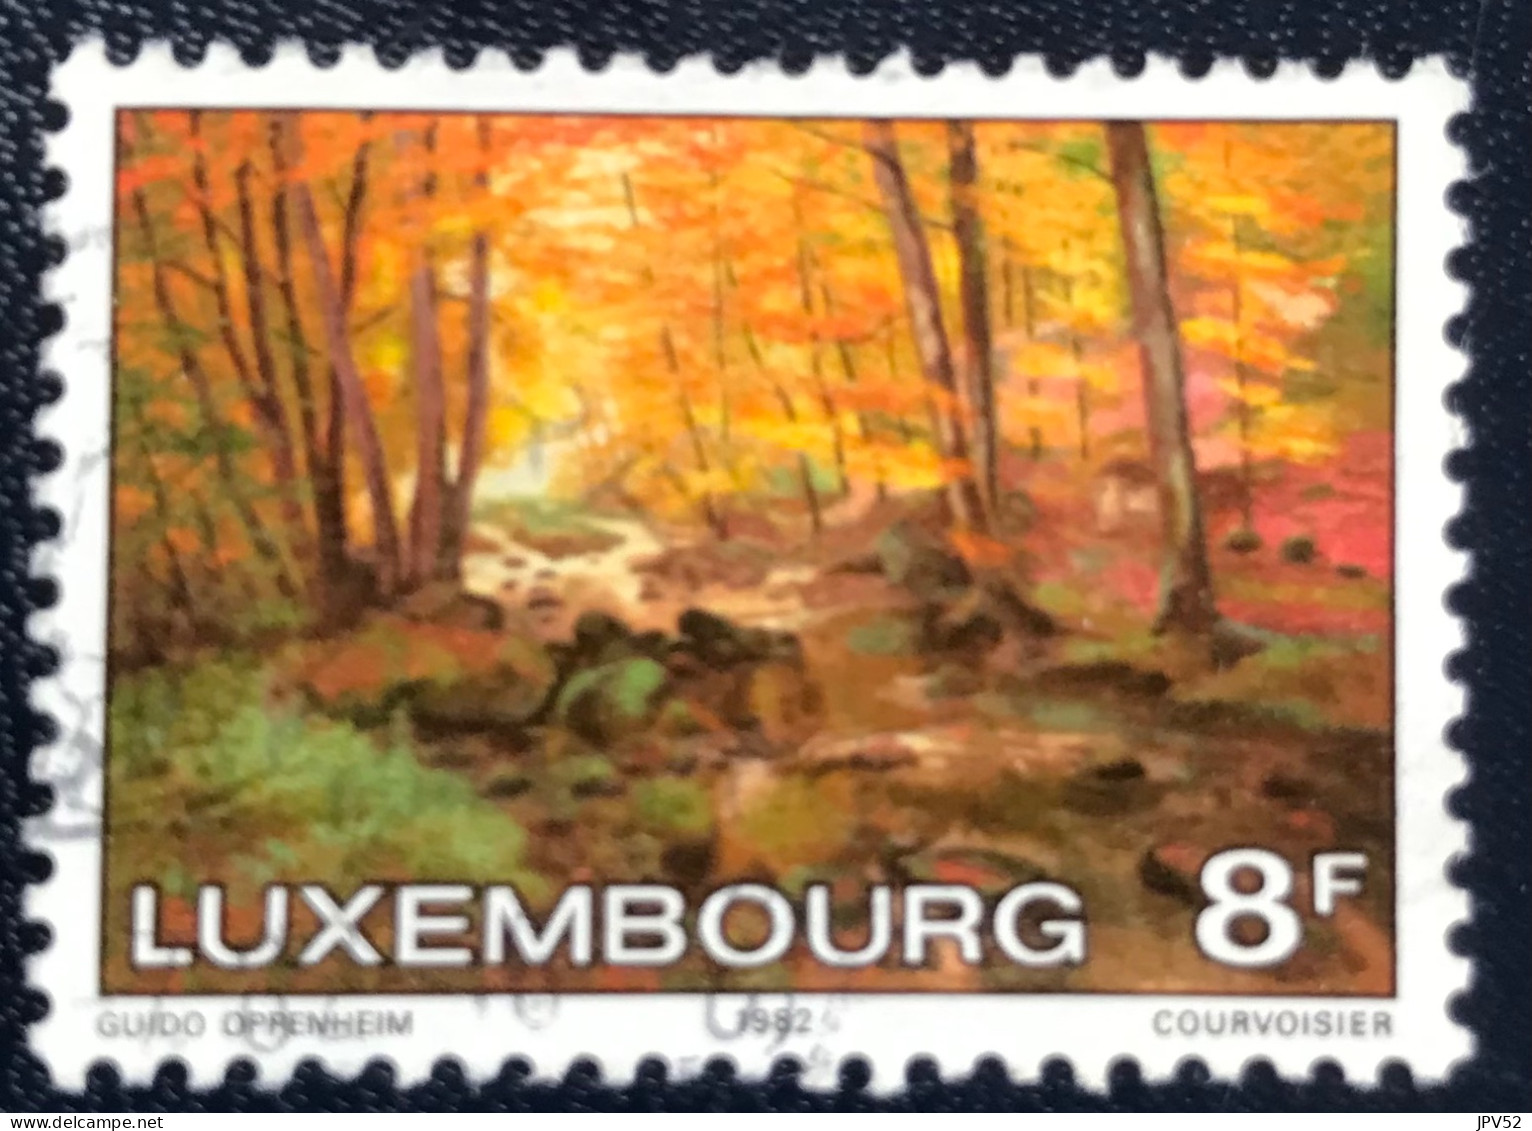 Luxembourg - Luxemburg - C18/31 - 1982 - (°)used - Michel 1048 - Schilderijen - Gebraucht